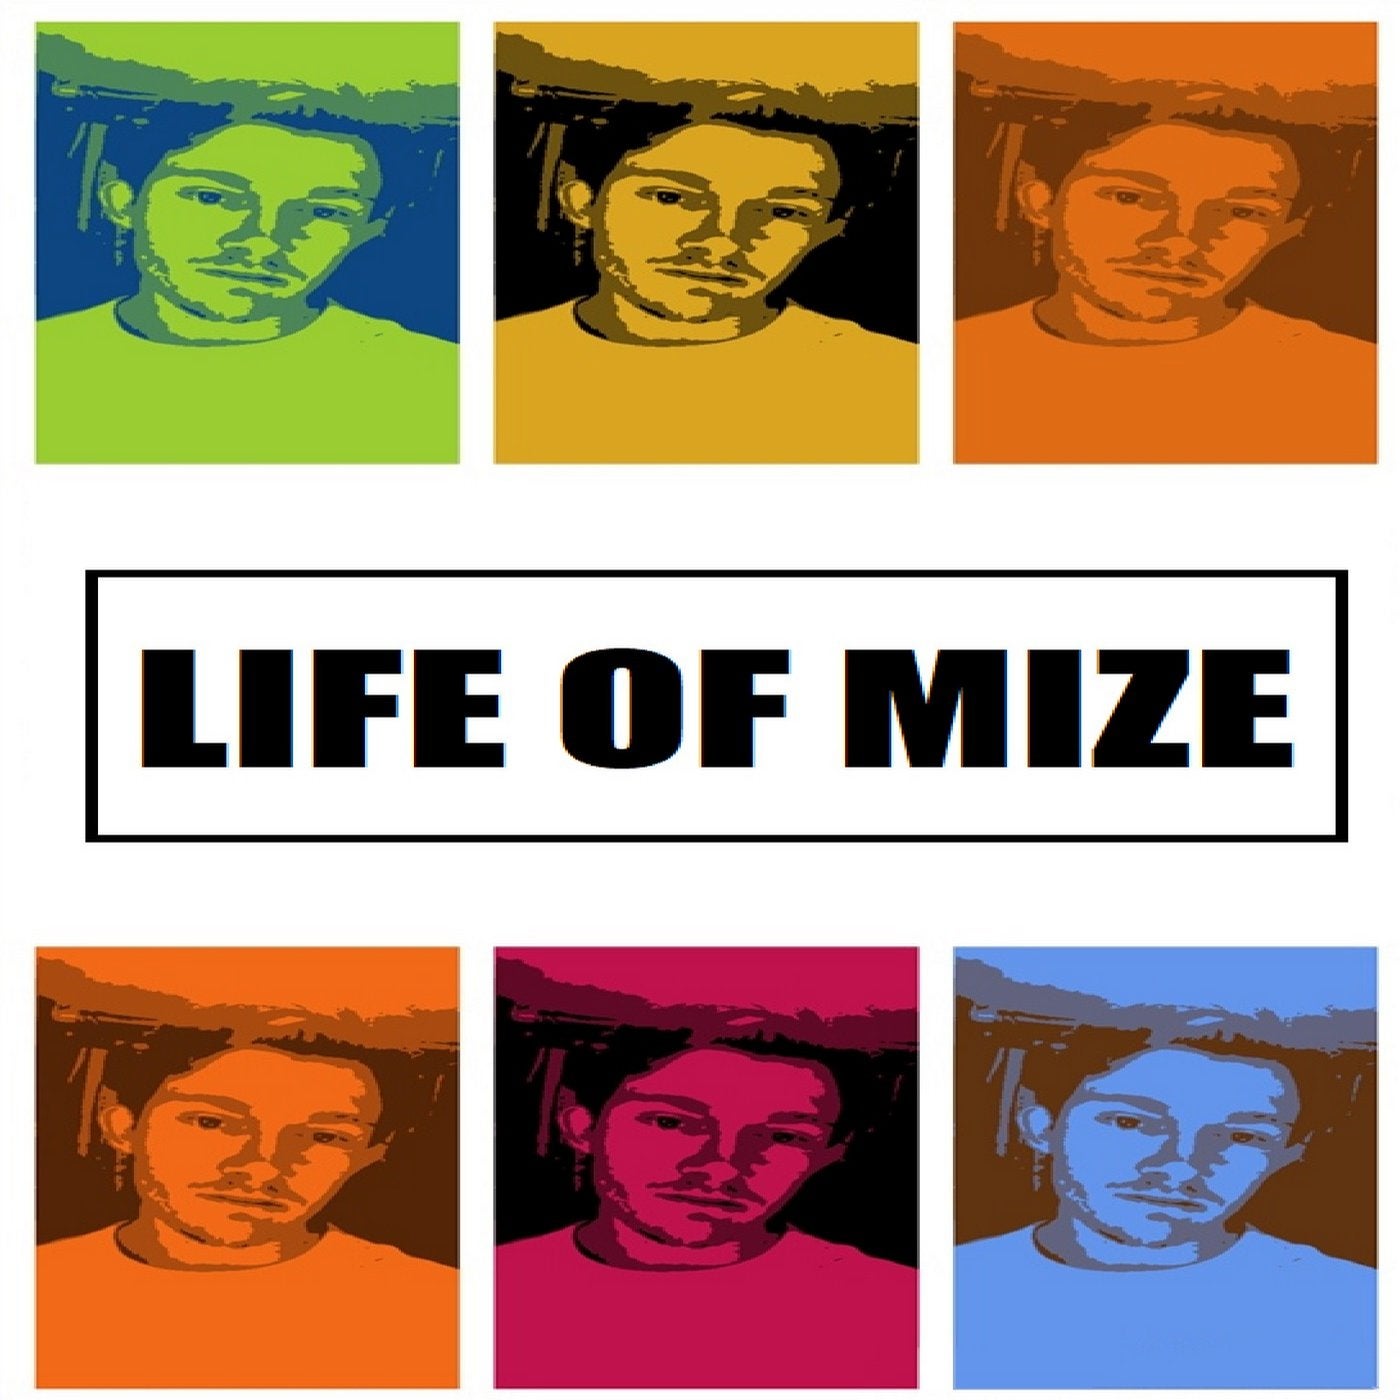 Life of Mize